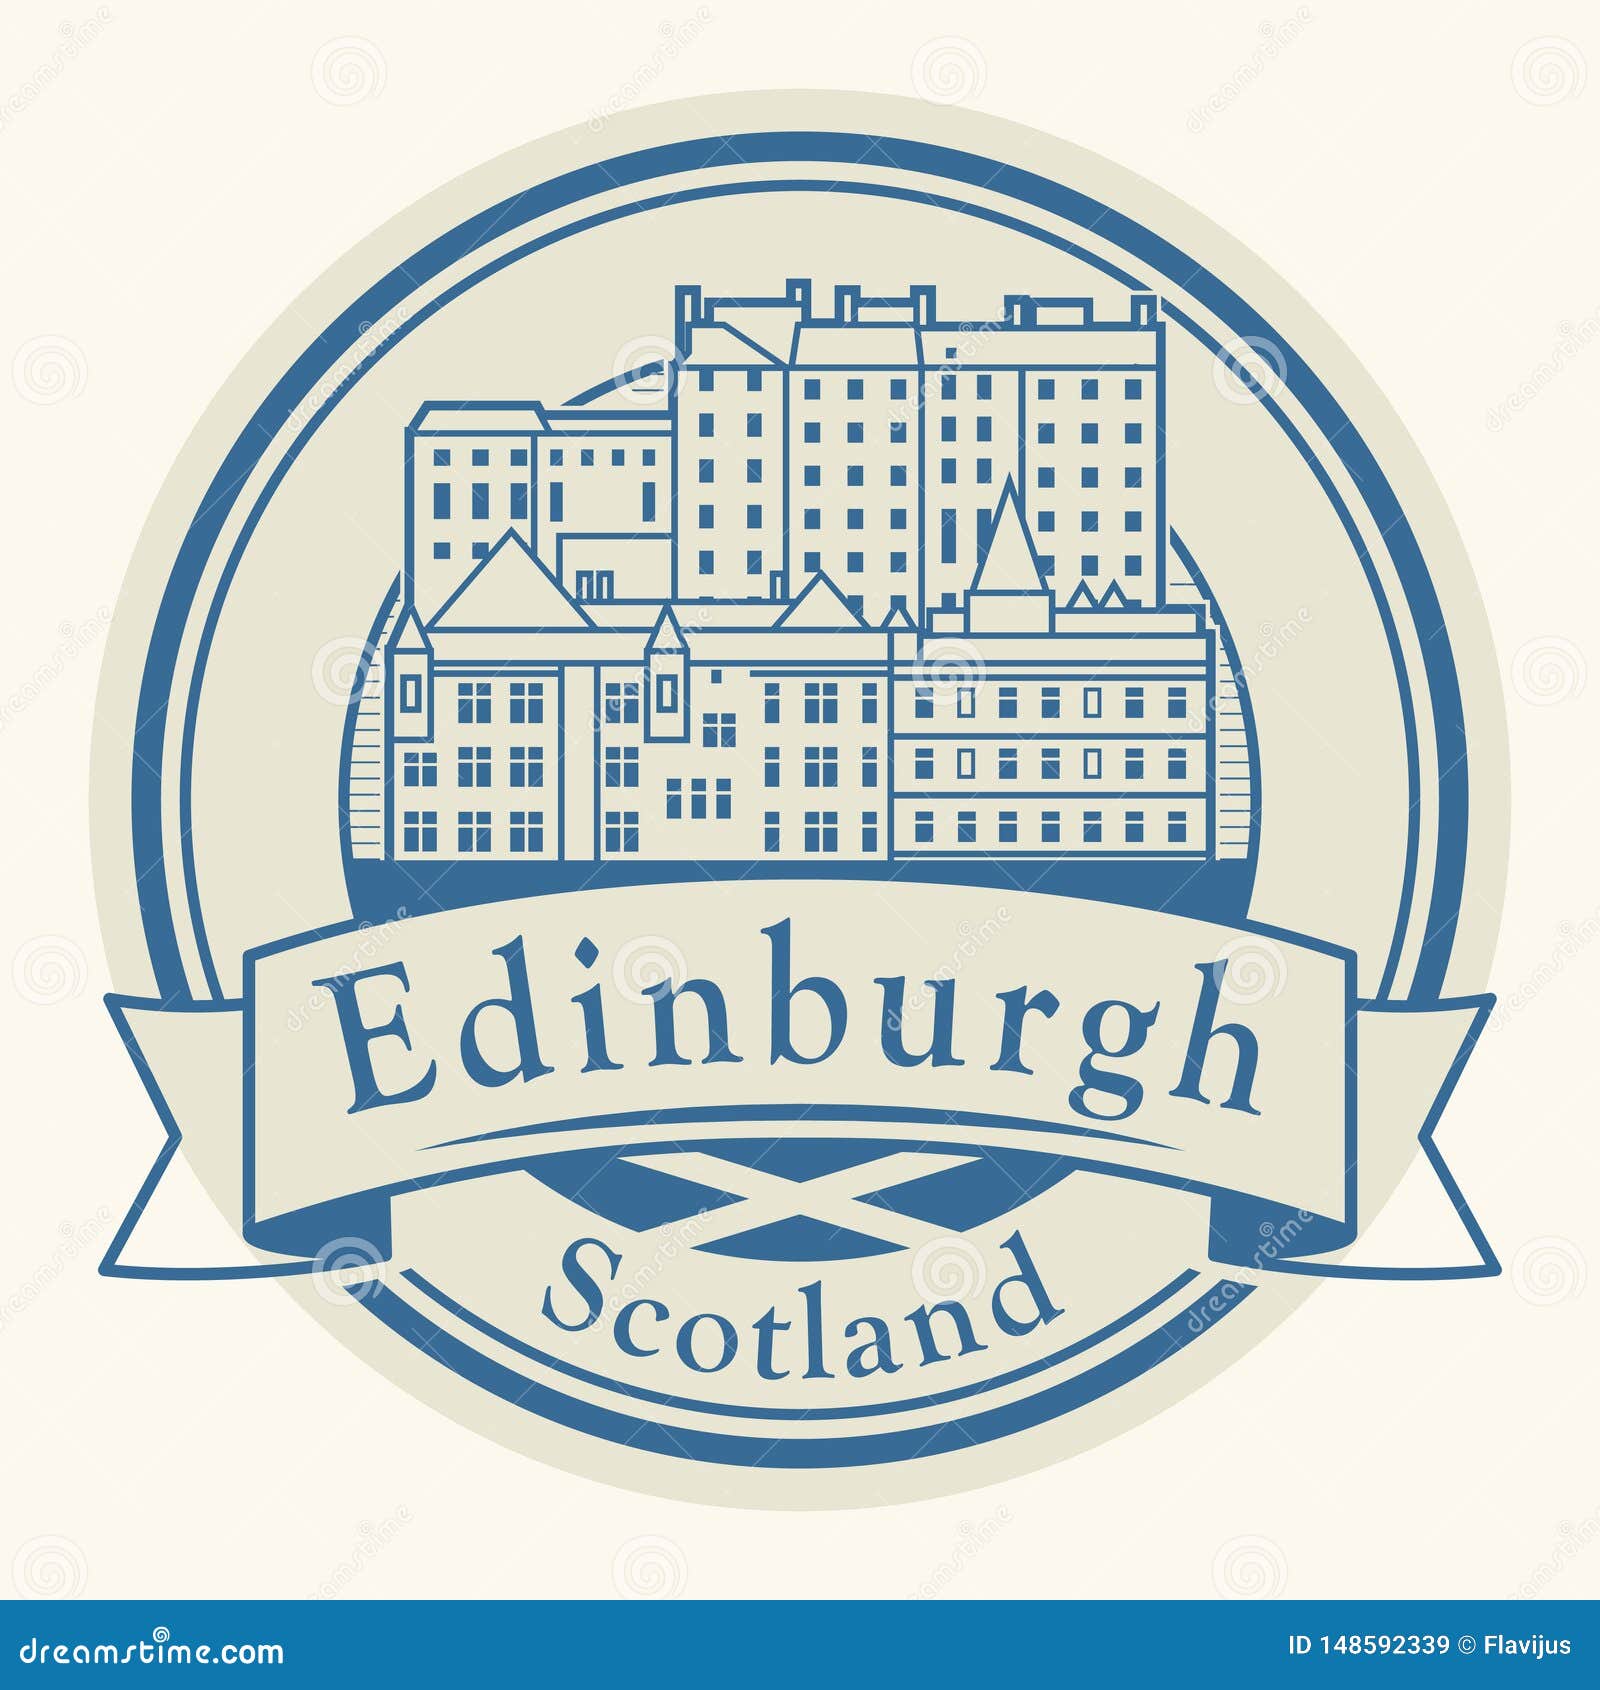 Edinburgh, Scotland stamp. Abstract rubber stamp with Edinburgh old town, and text Edinburgh, Scotland inside, vector illustration